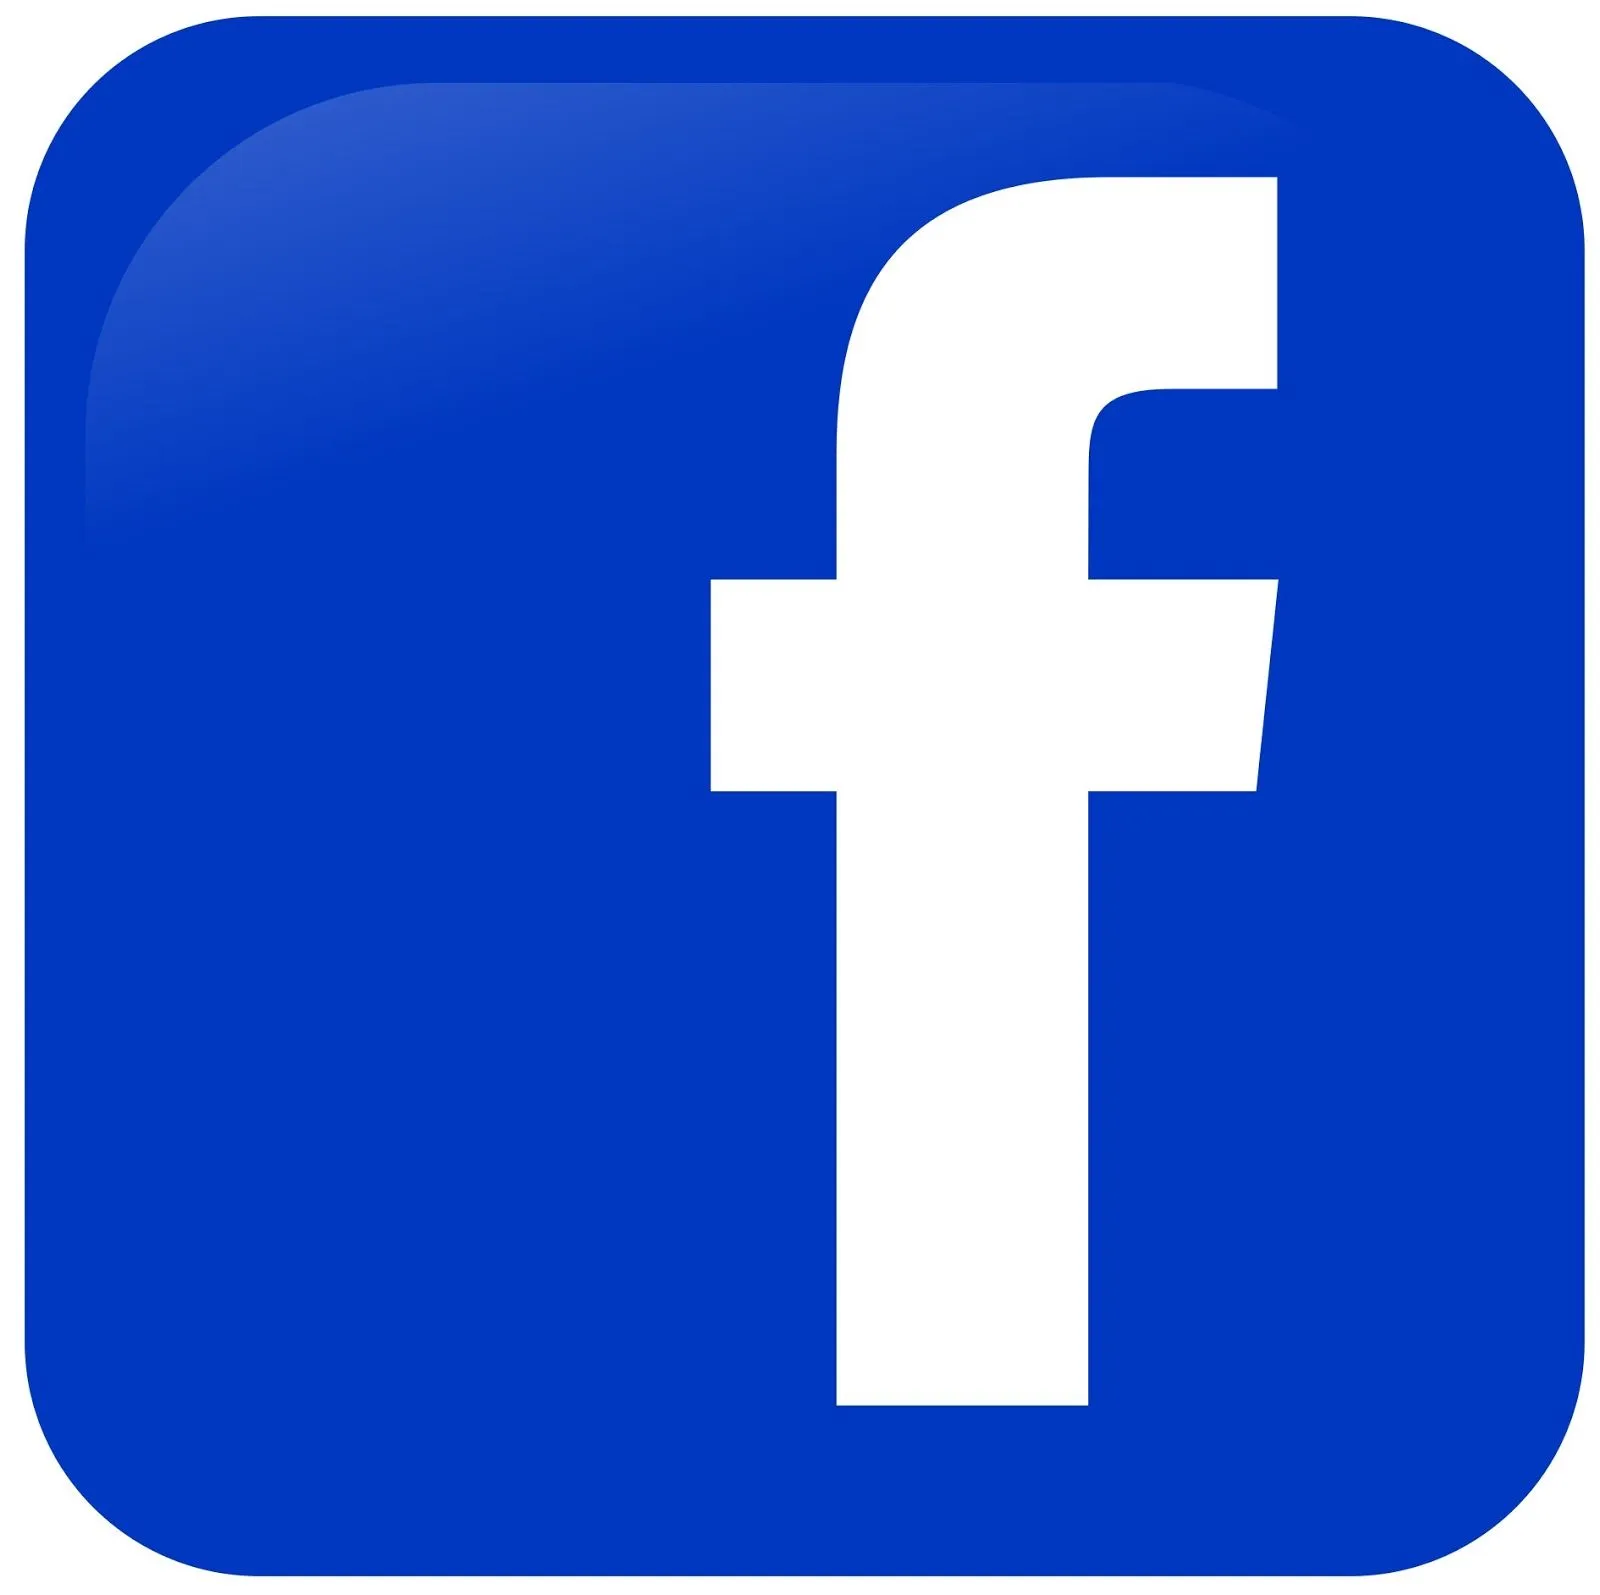 Facebook Logo Vector Free Download - ClipArt Best